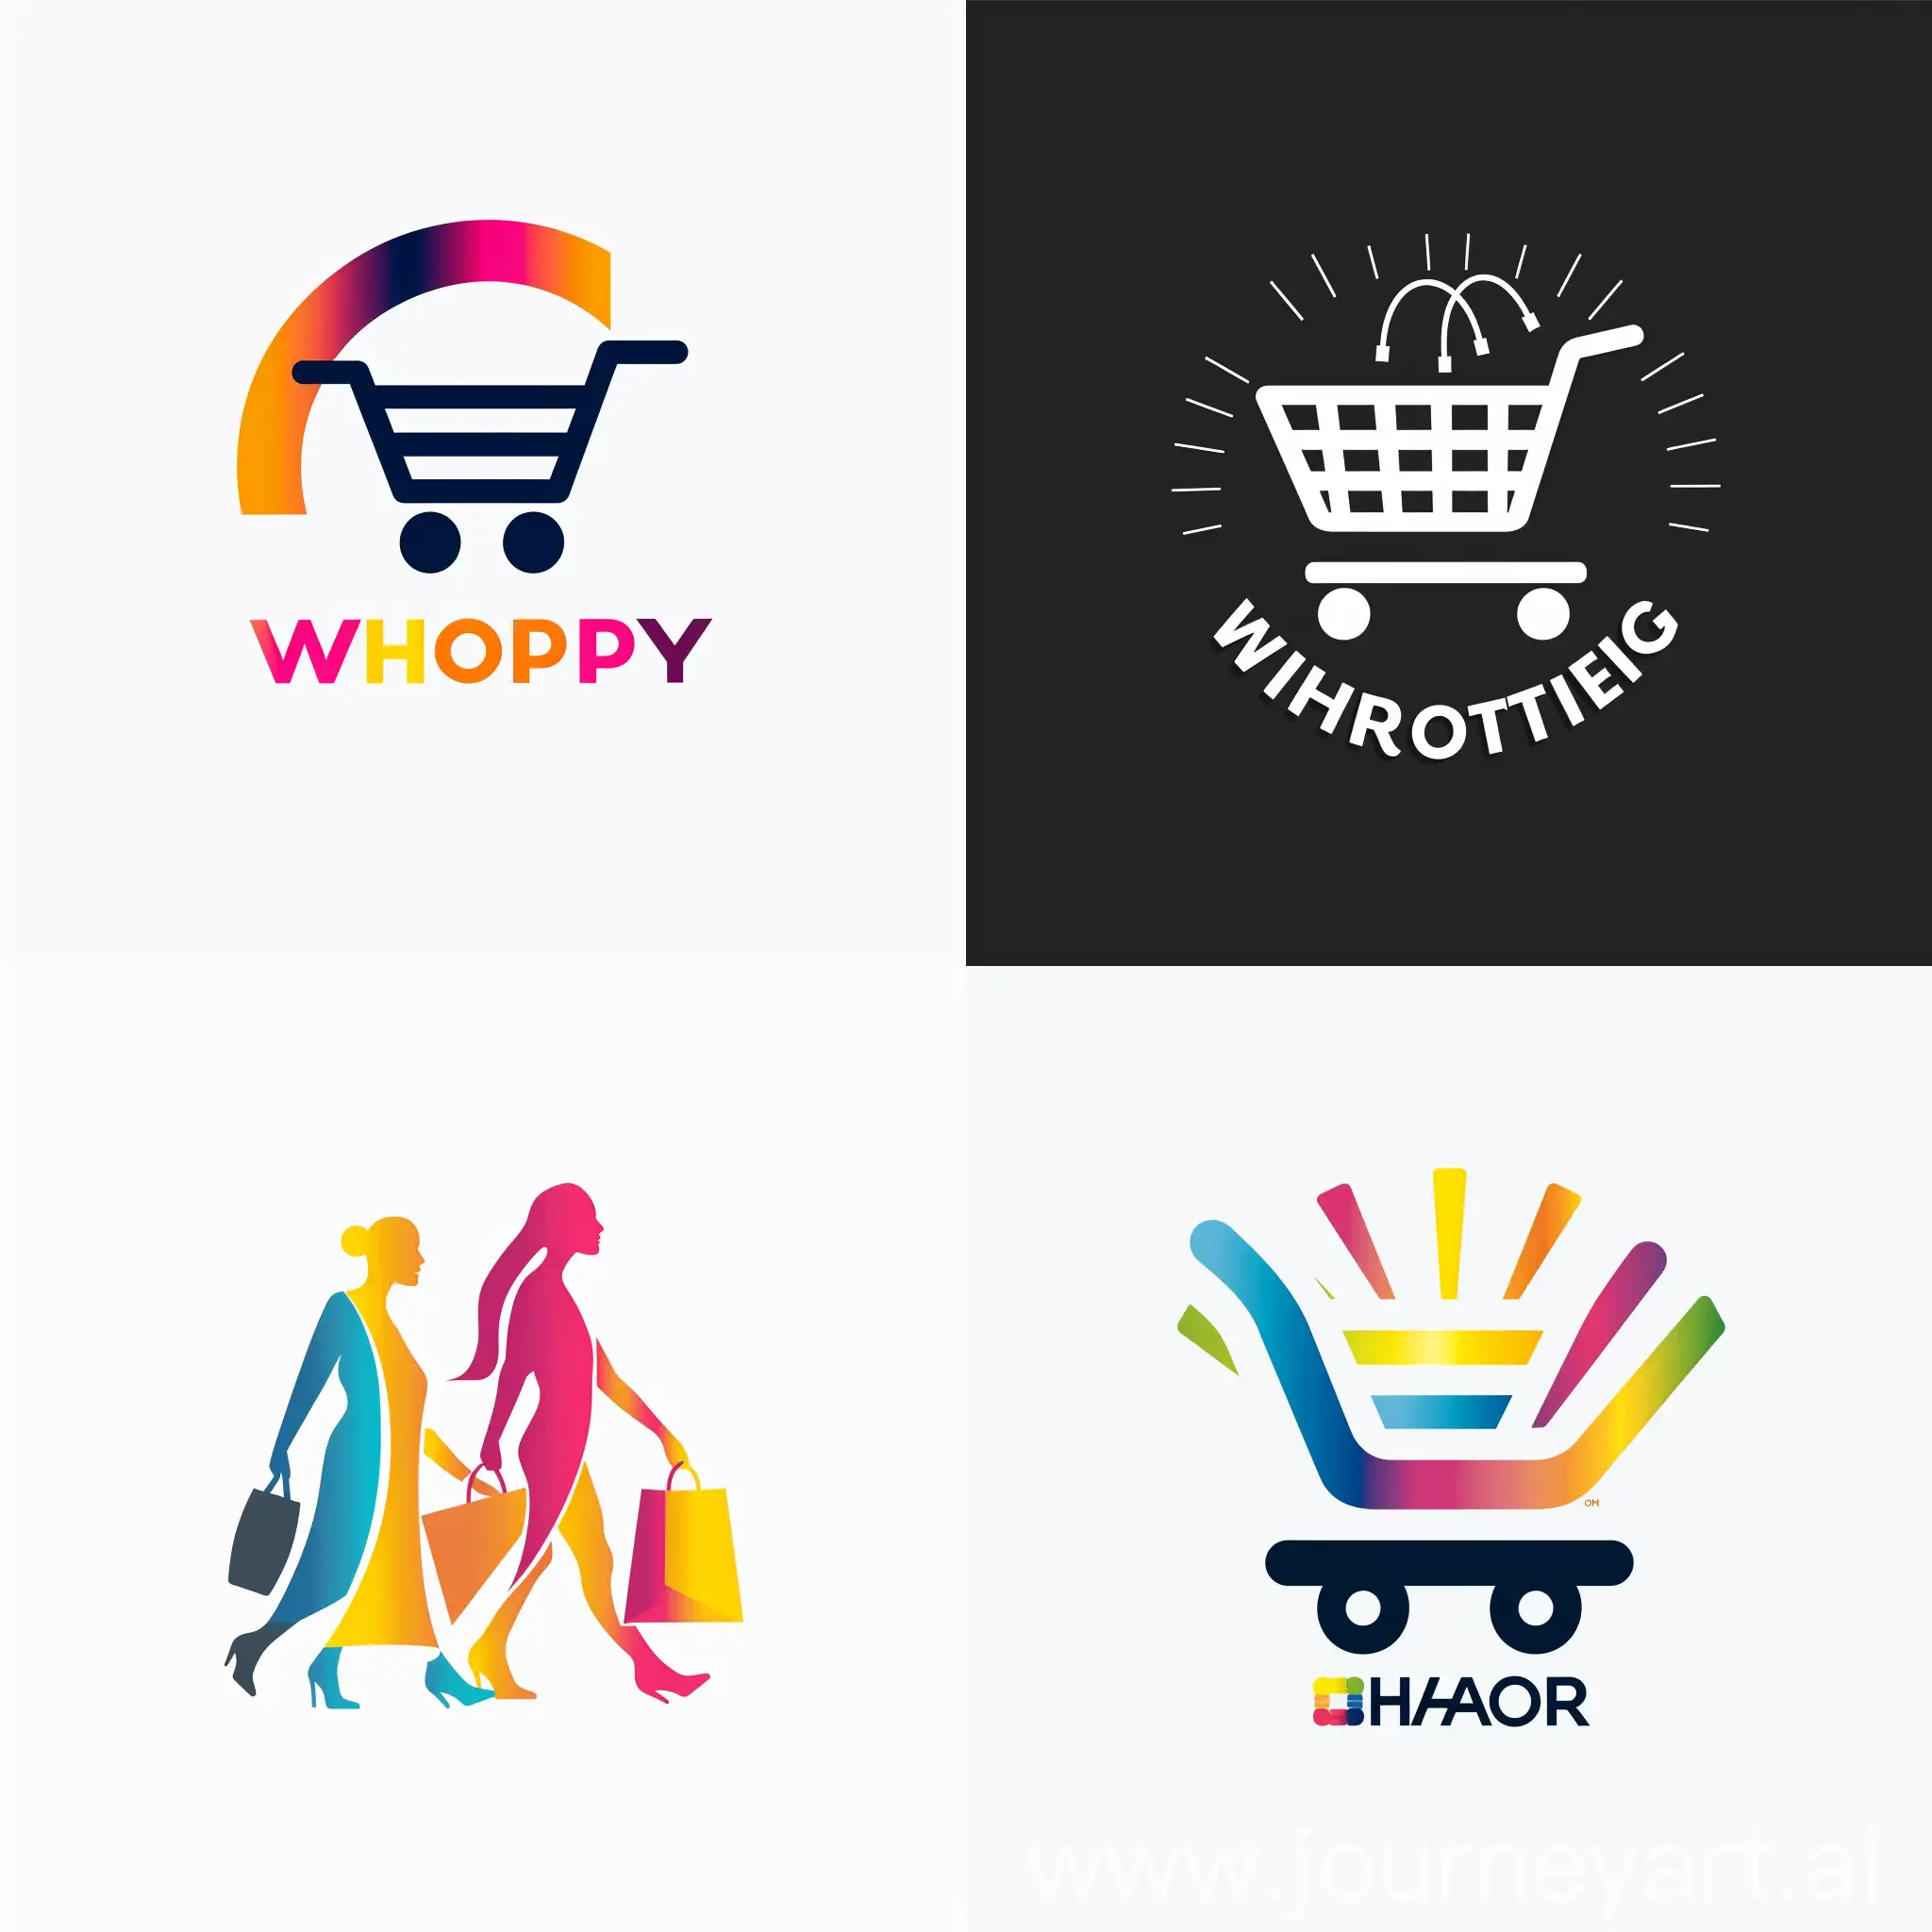 logo denoting shopping culture